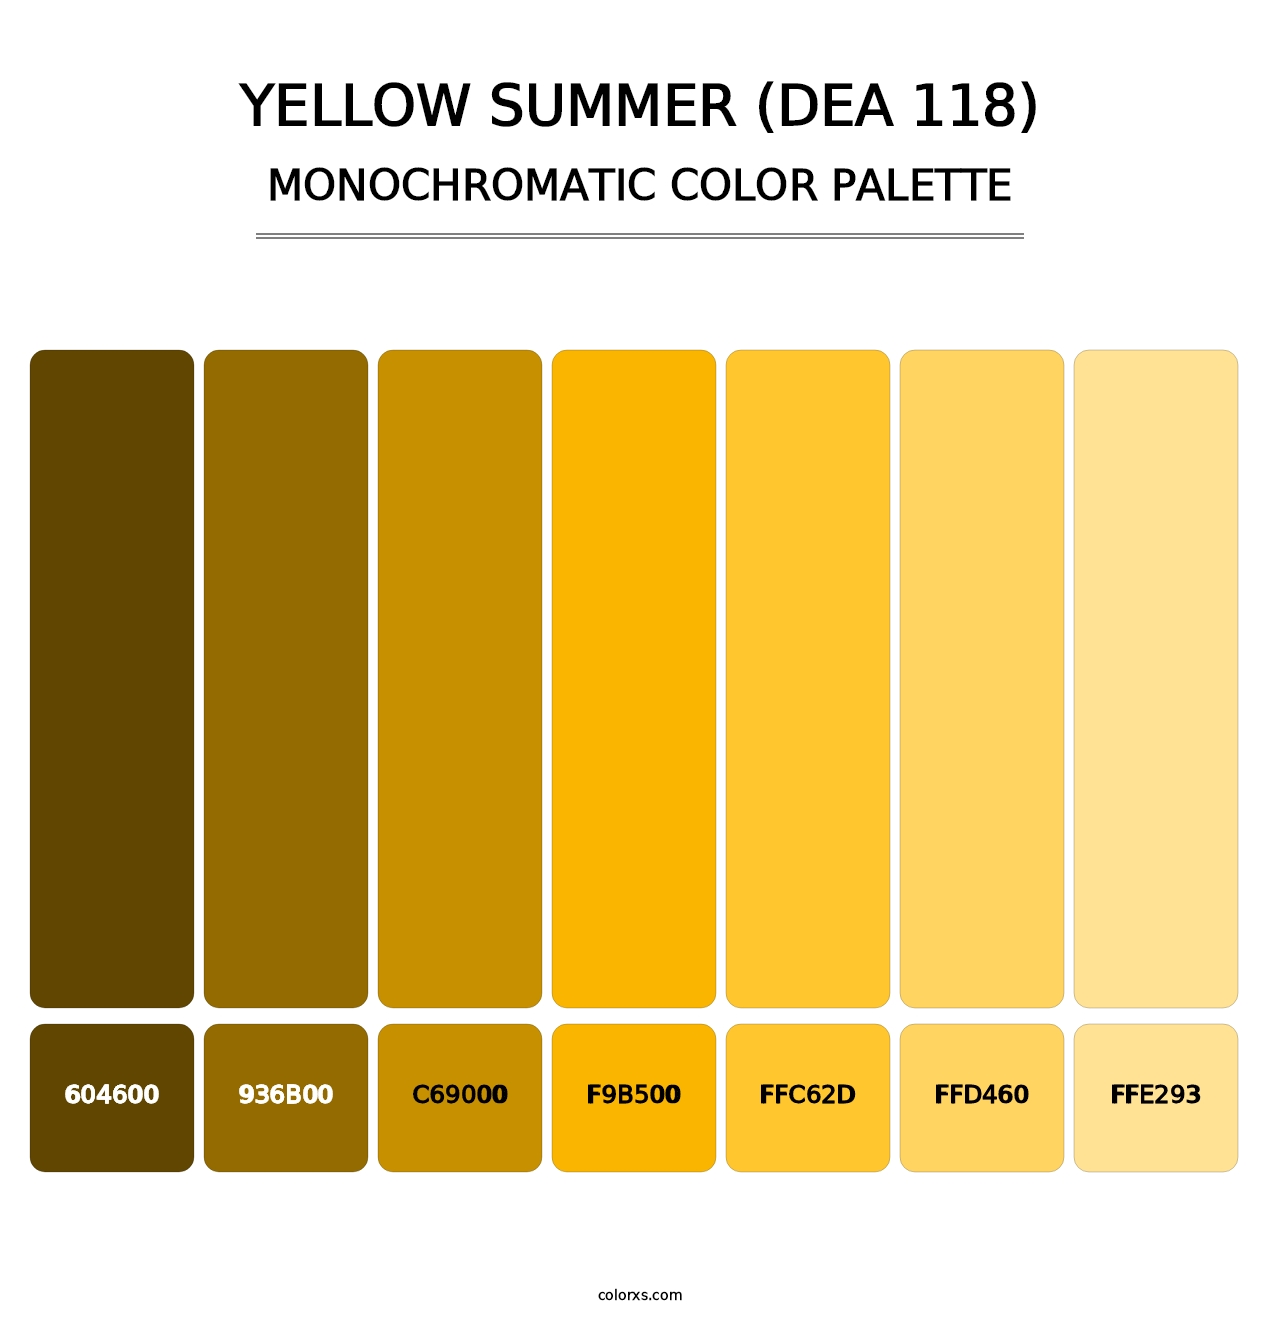 Yellow Summer (DEA 118) - Monochromatic Color Palette